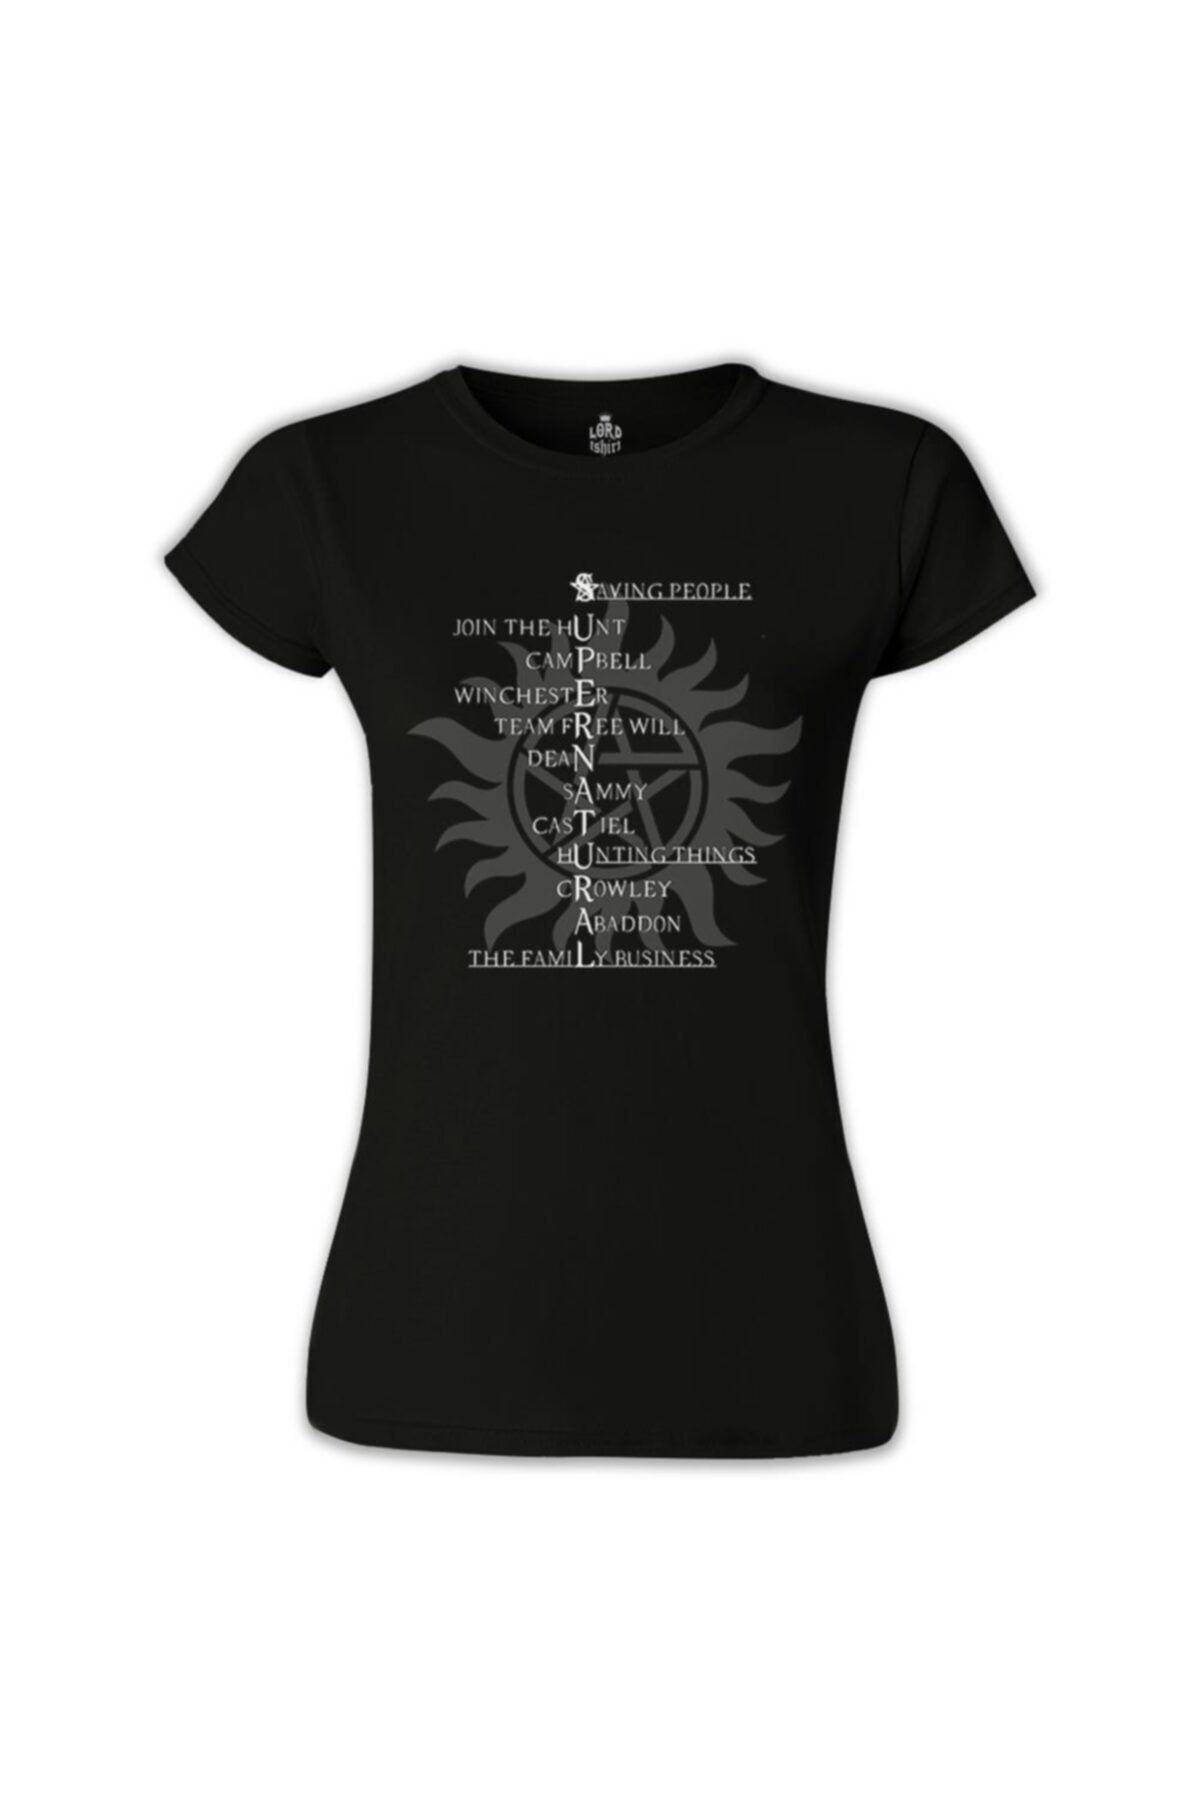 Lord T-Shirt Kadın Supernatural - Saving People Siyah Tshirt